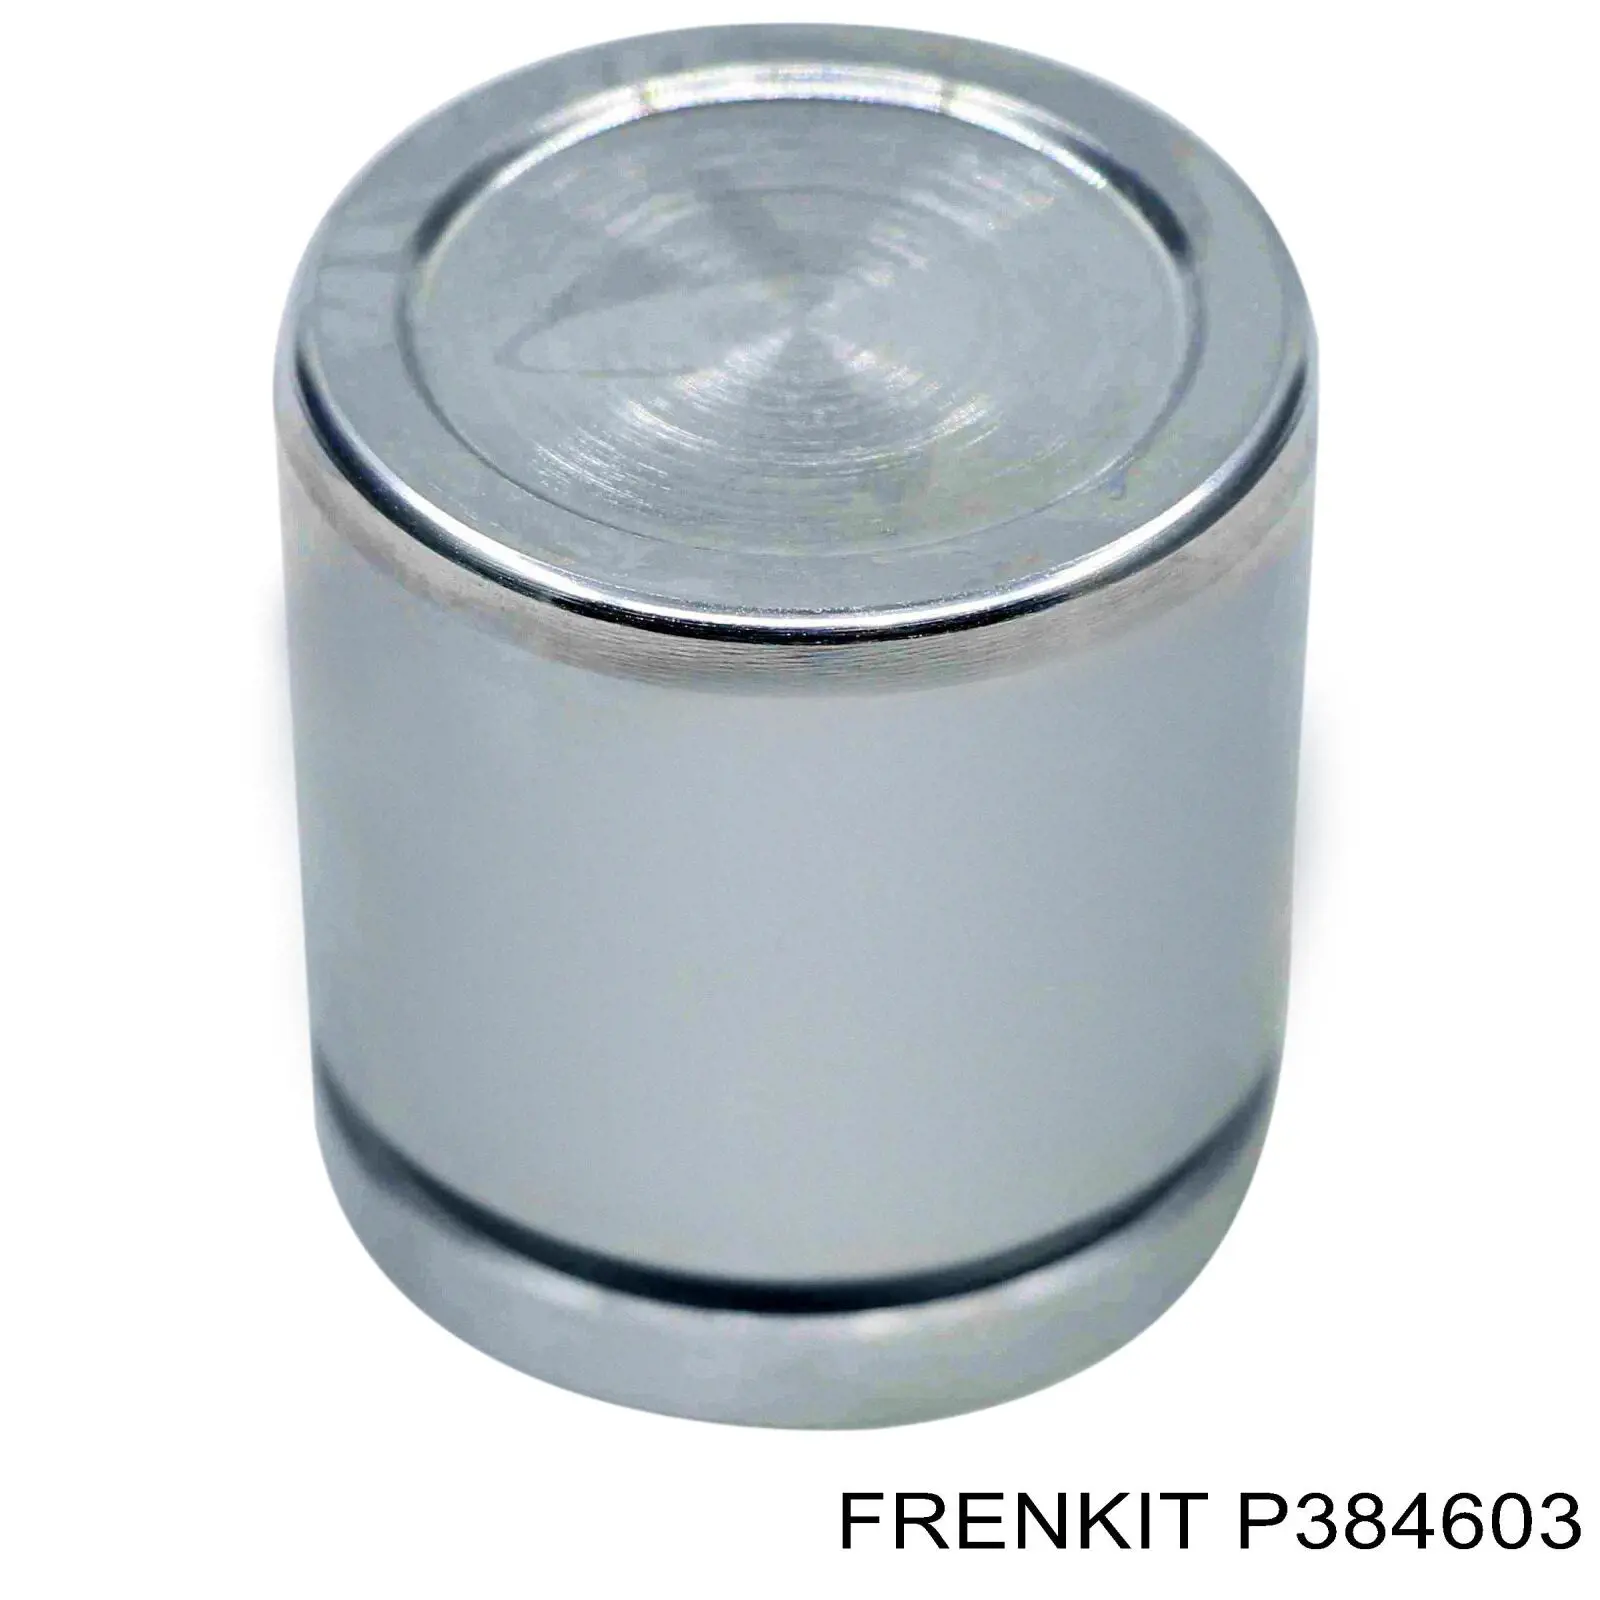 P384603 Frenkit поршень суппорта тормозного заднего